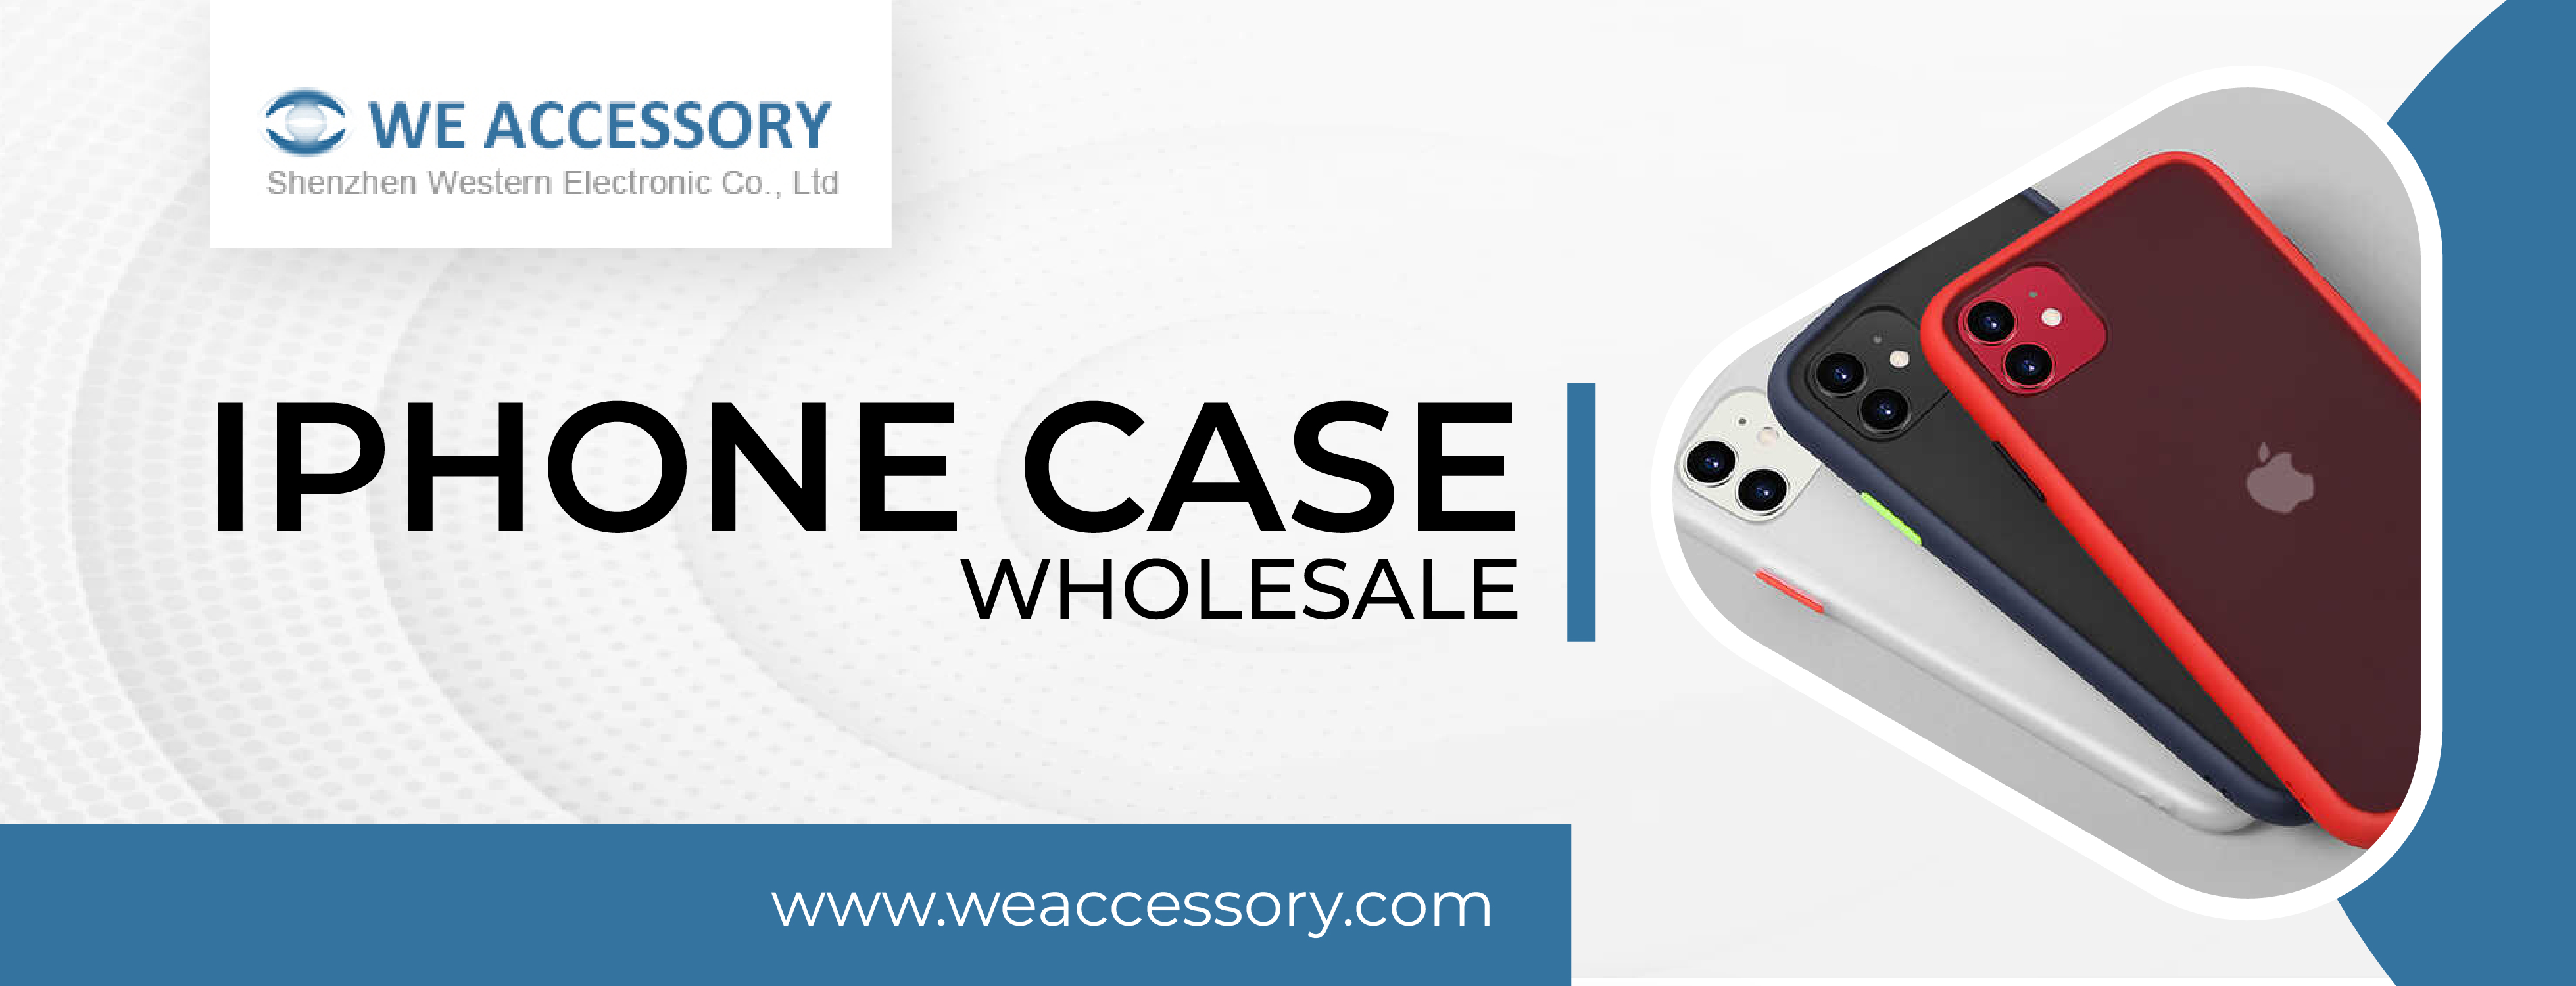 iPhone Case Wholesale